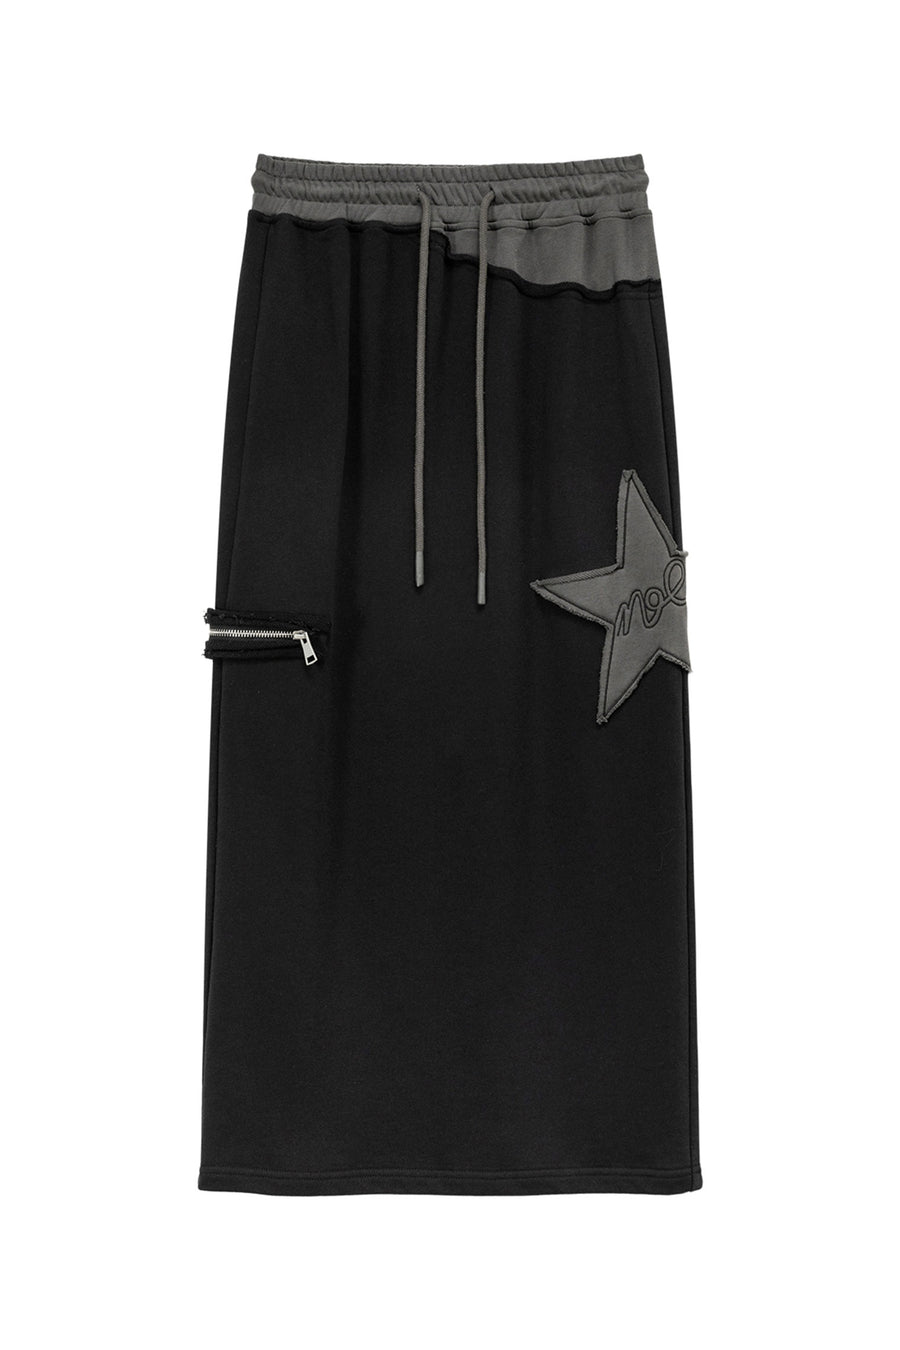 CHUU Star Color Long Skirt